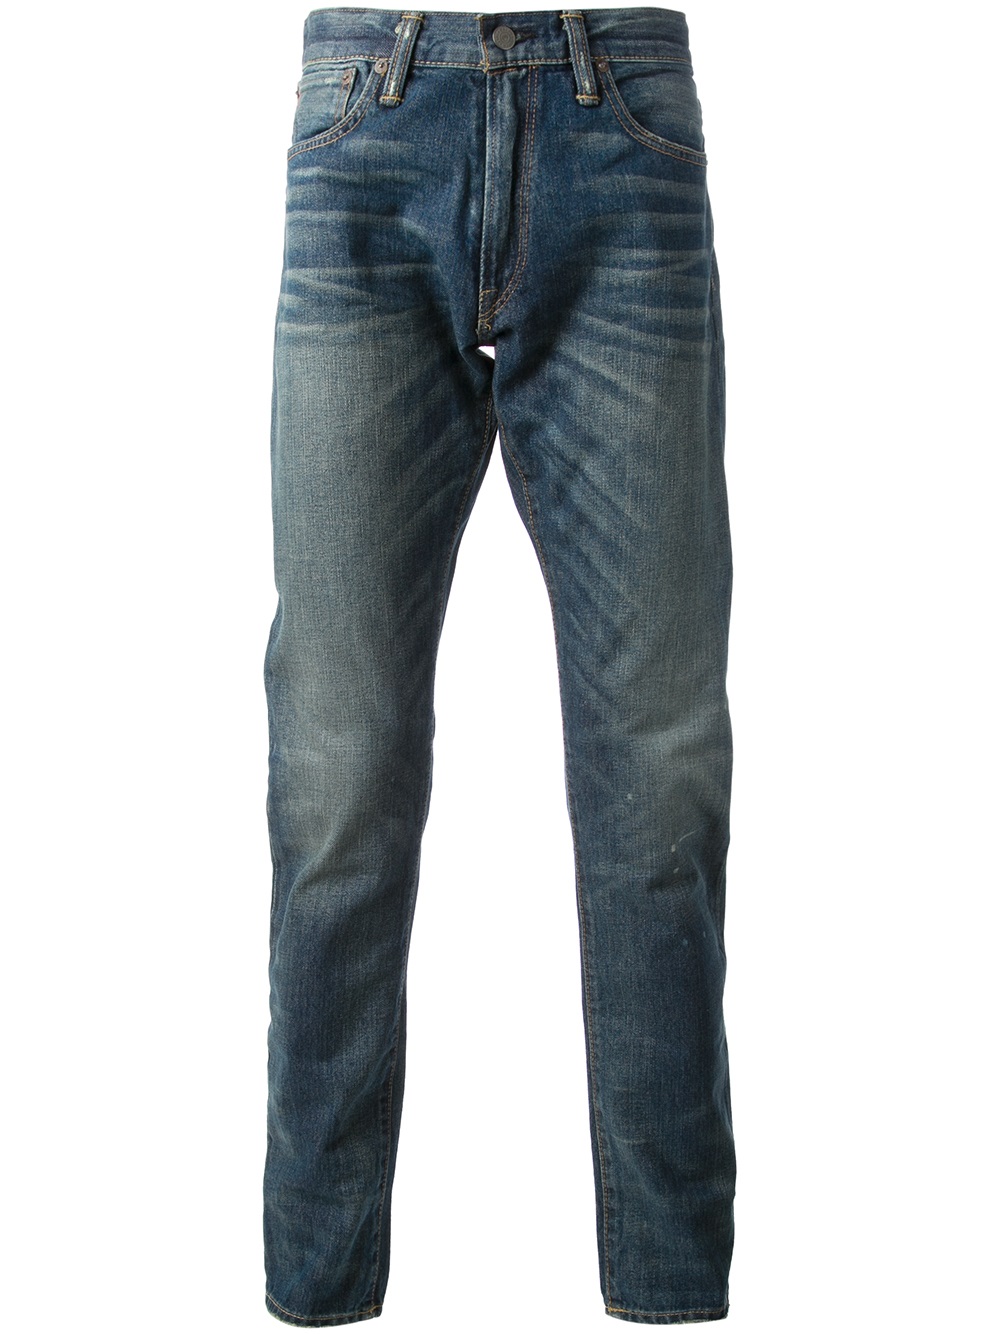 Lyst - Polo Ralph Lauren Stratford Jeans in Blue for Men